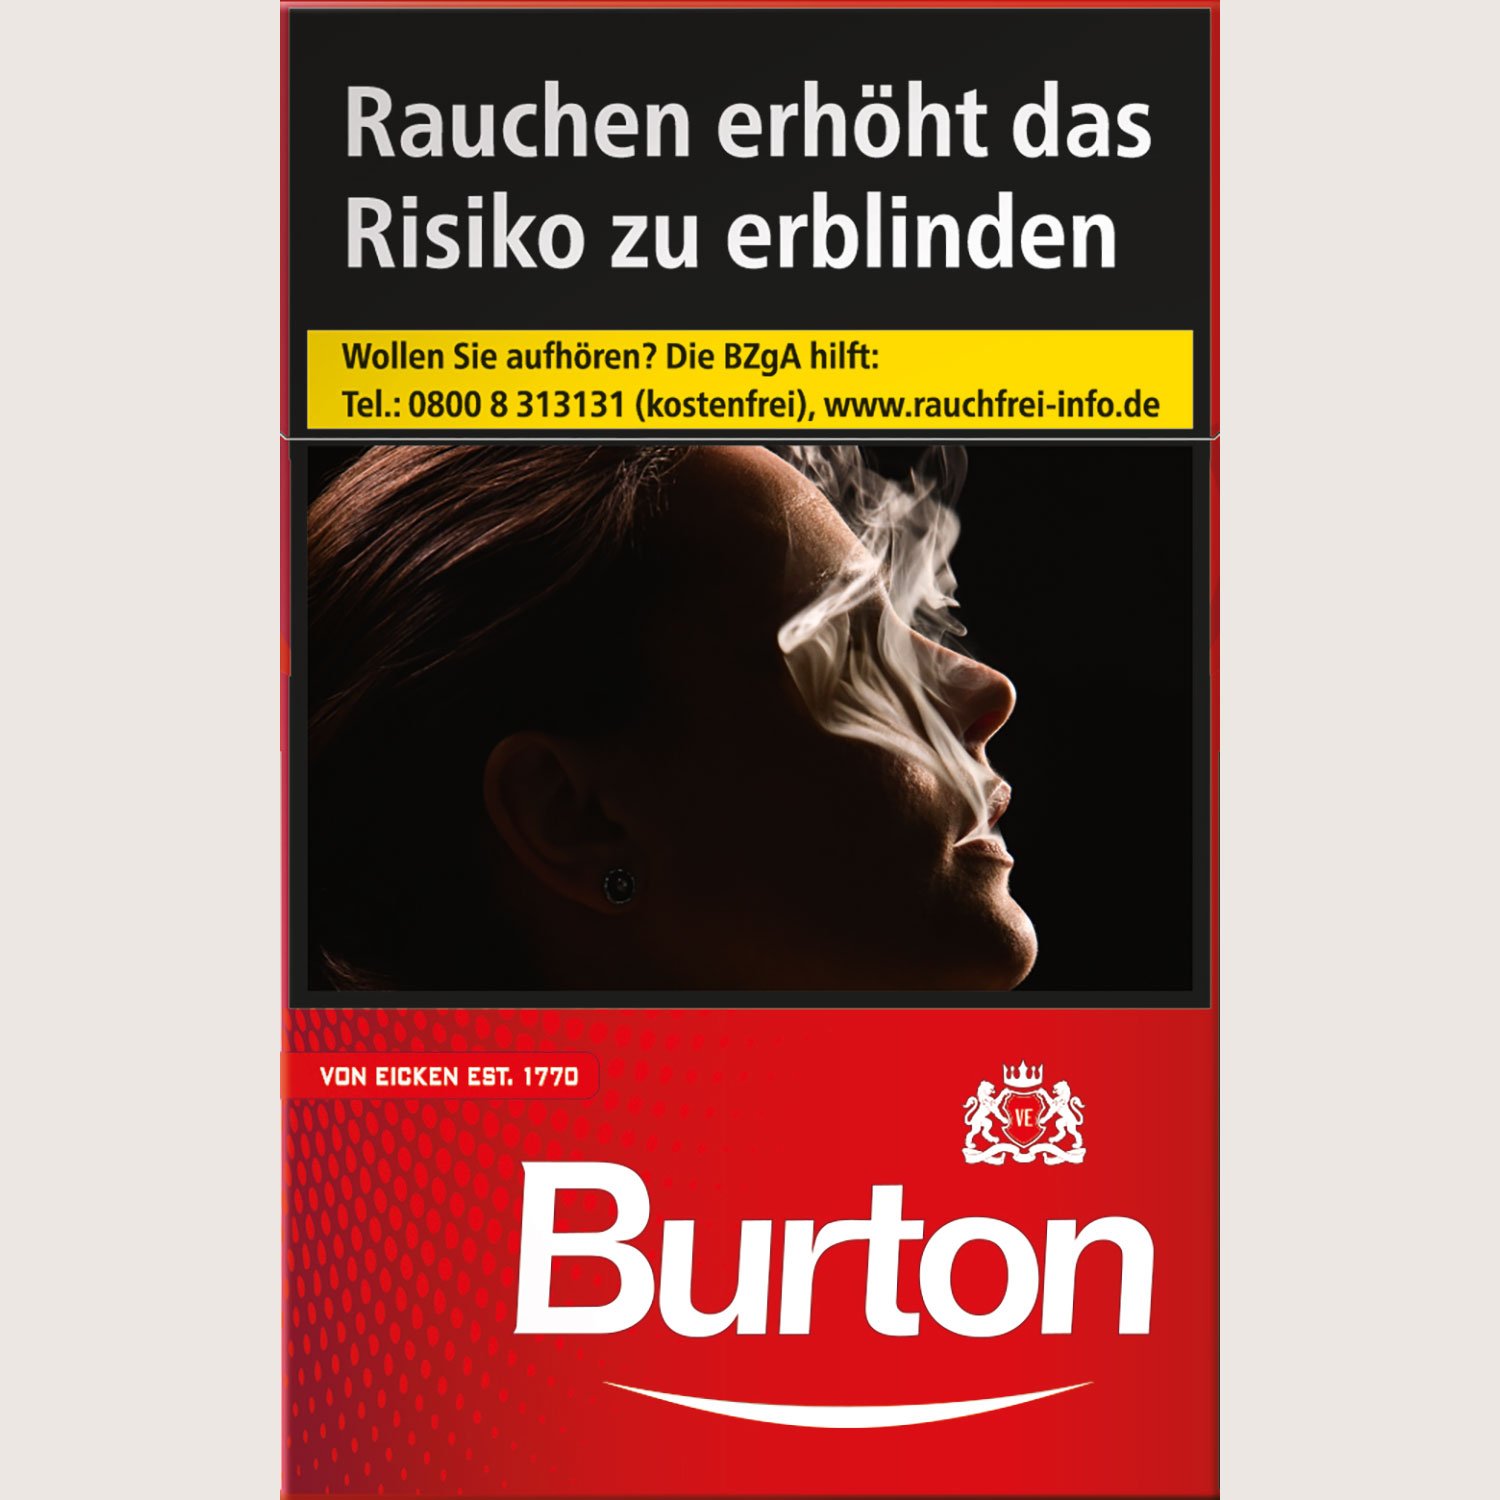 Burton Original 6,70 €